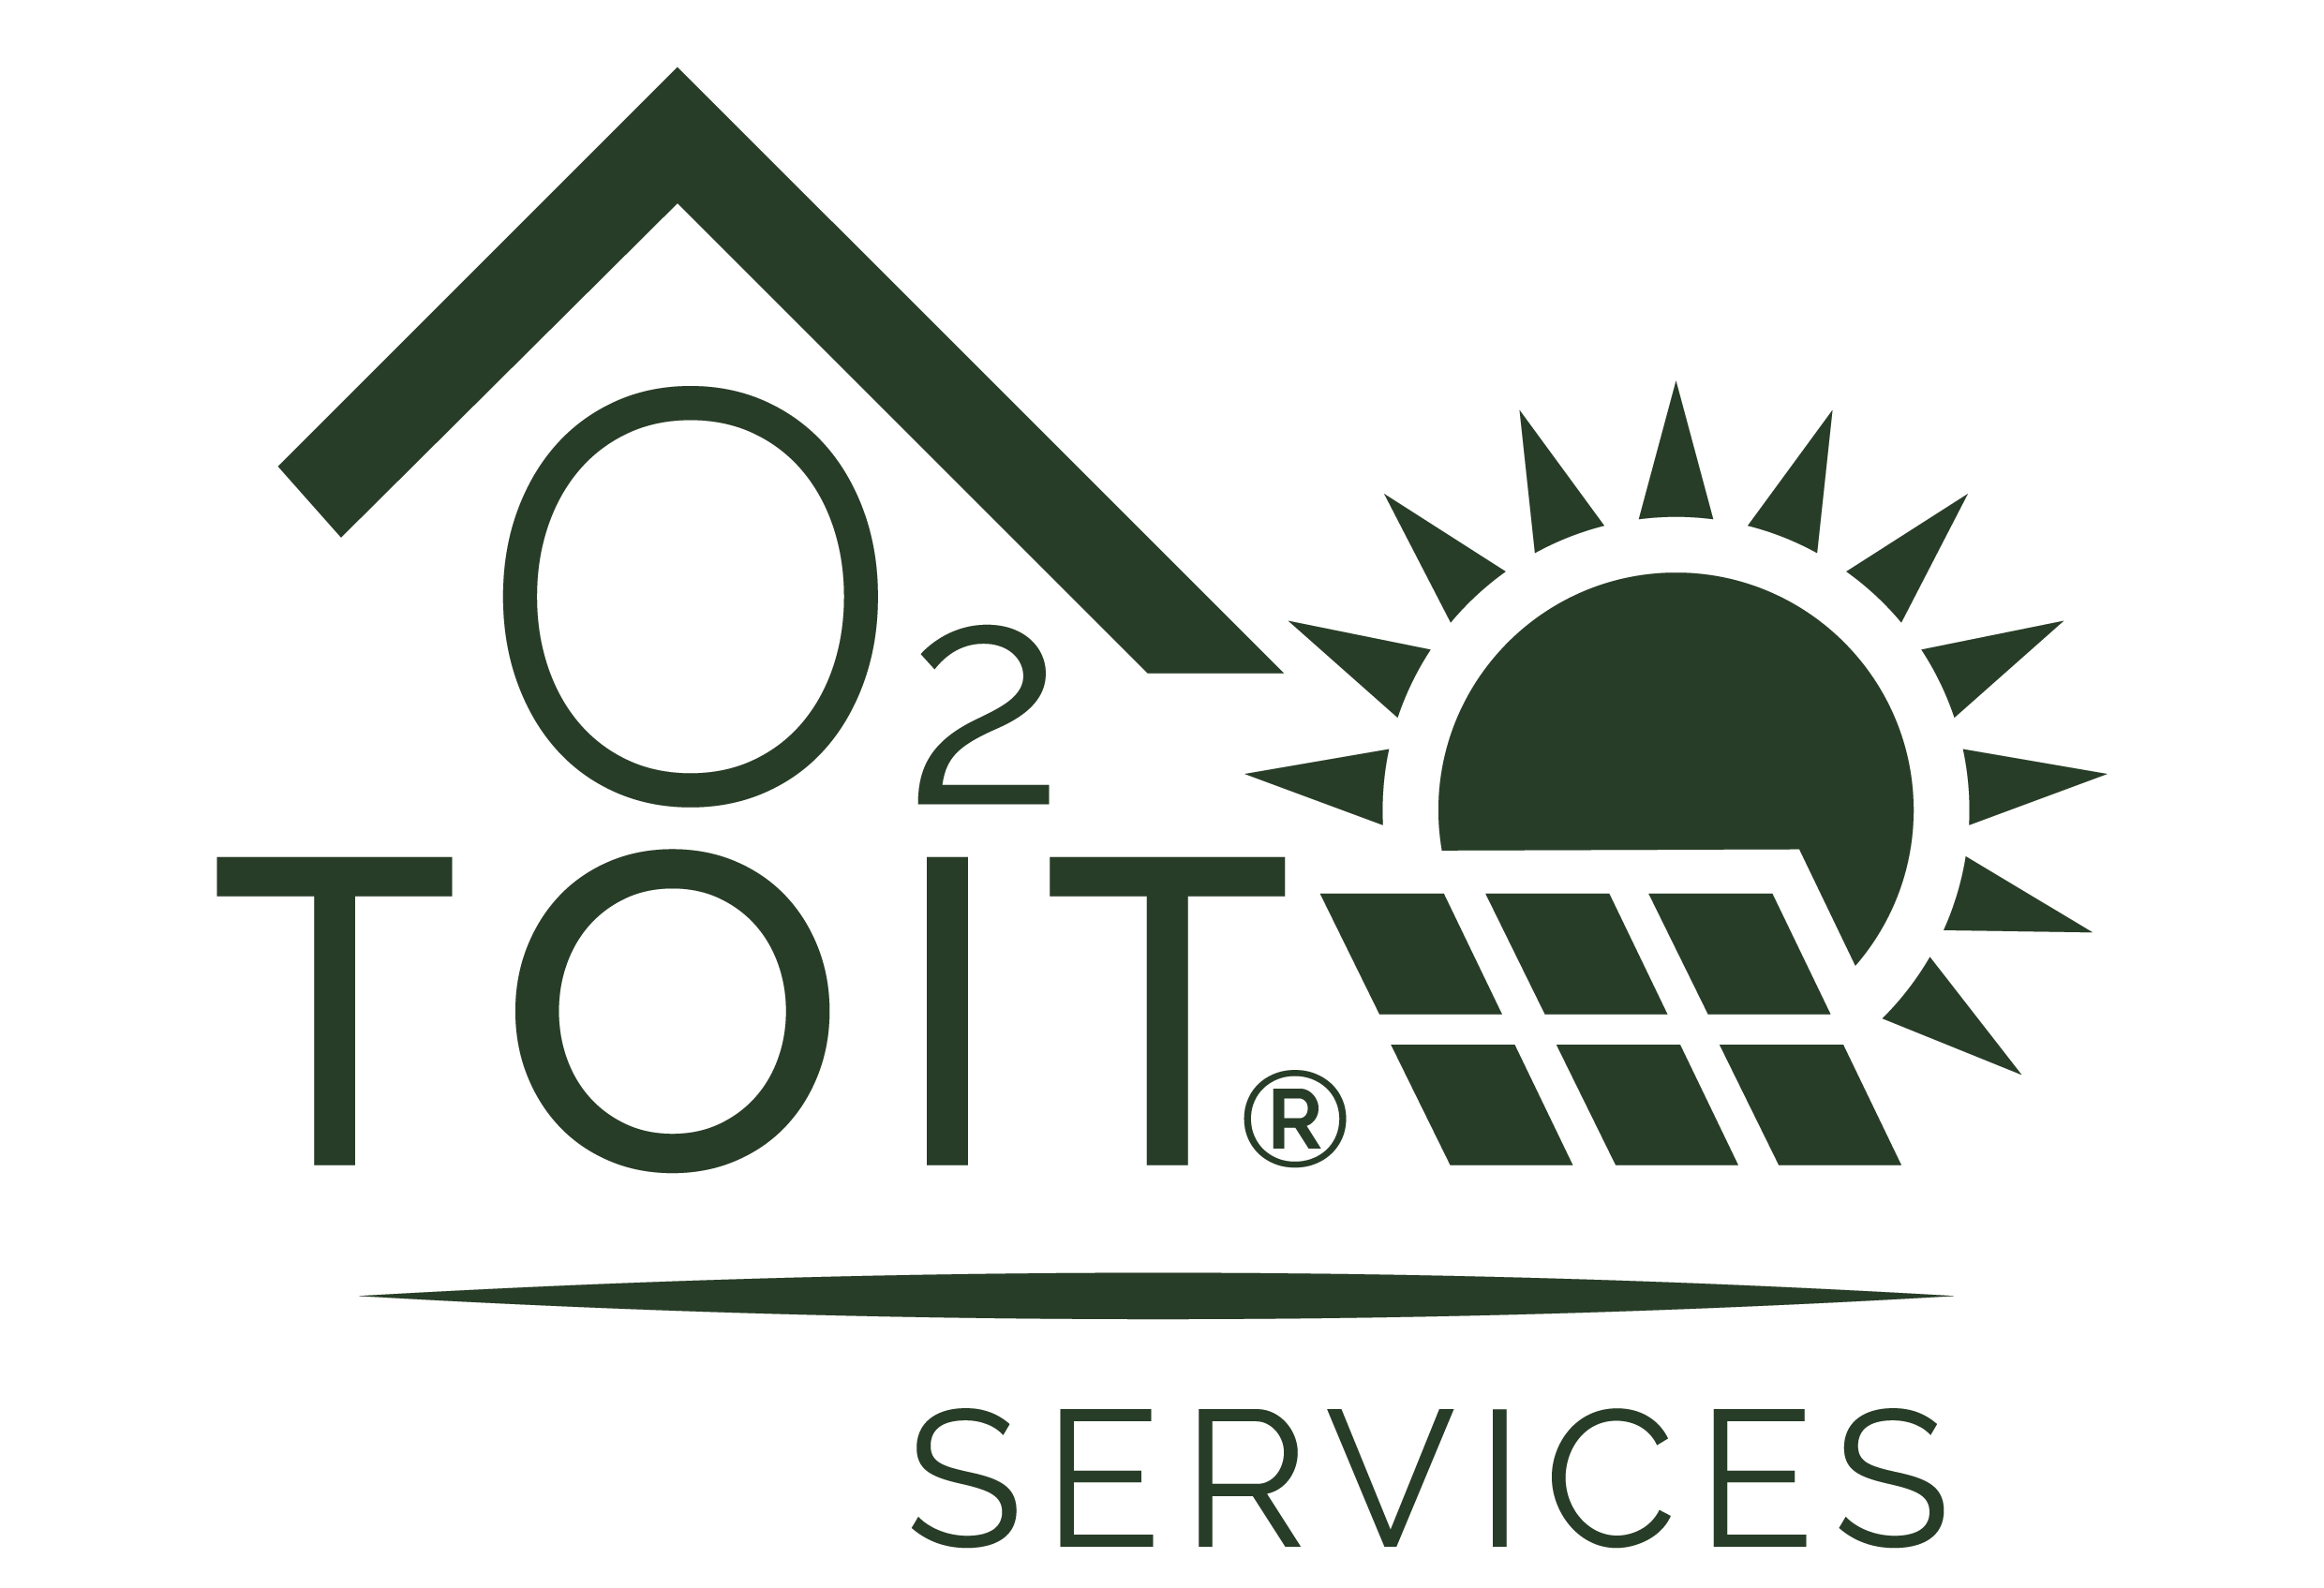 O2 TOIT SERVICES